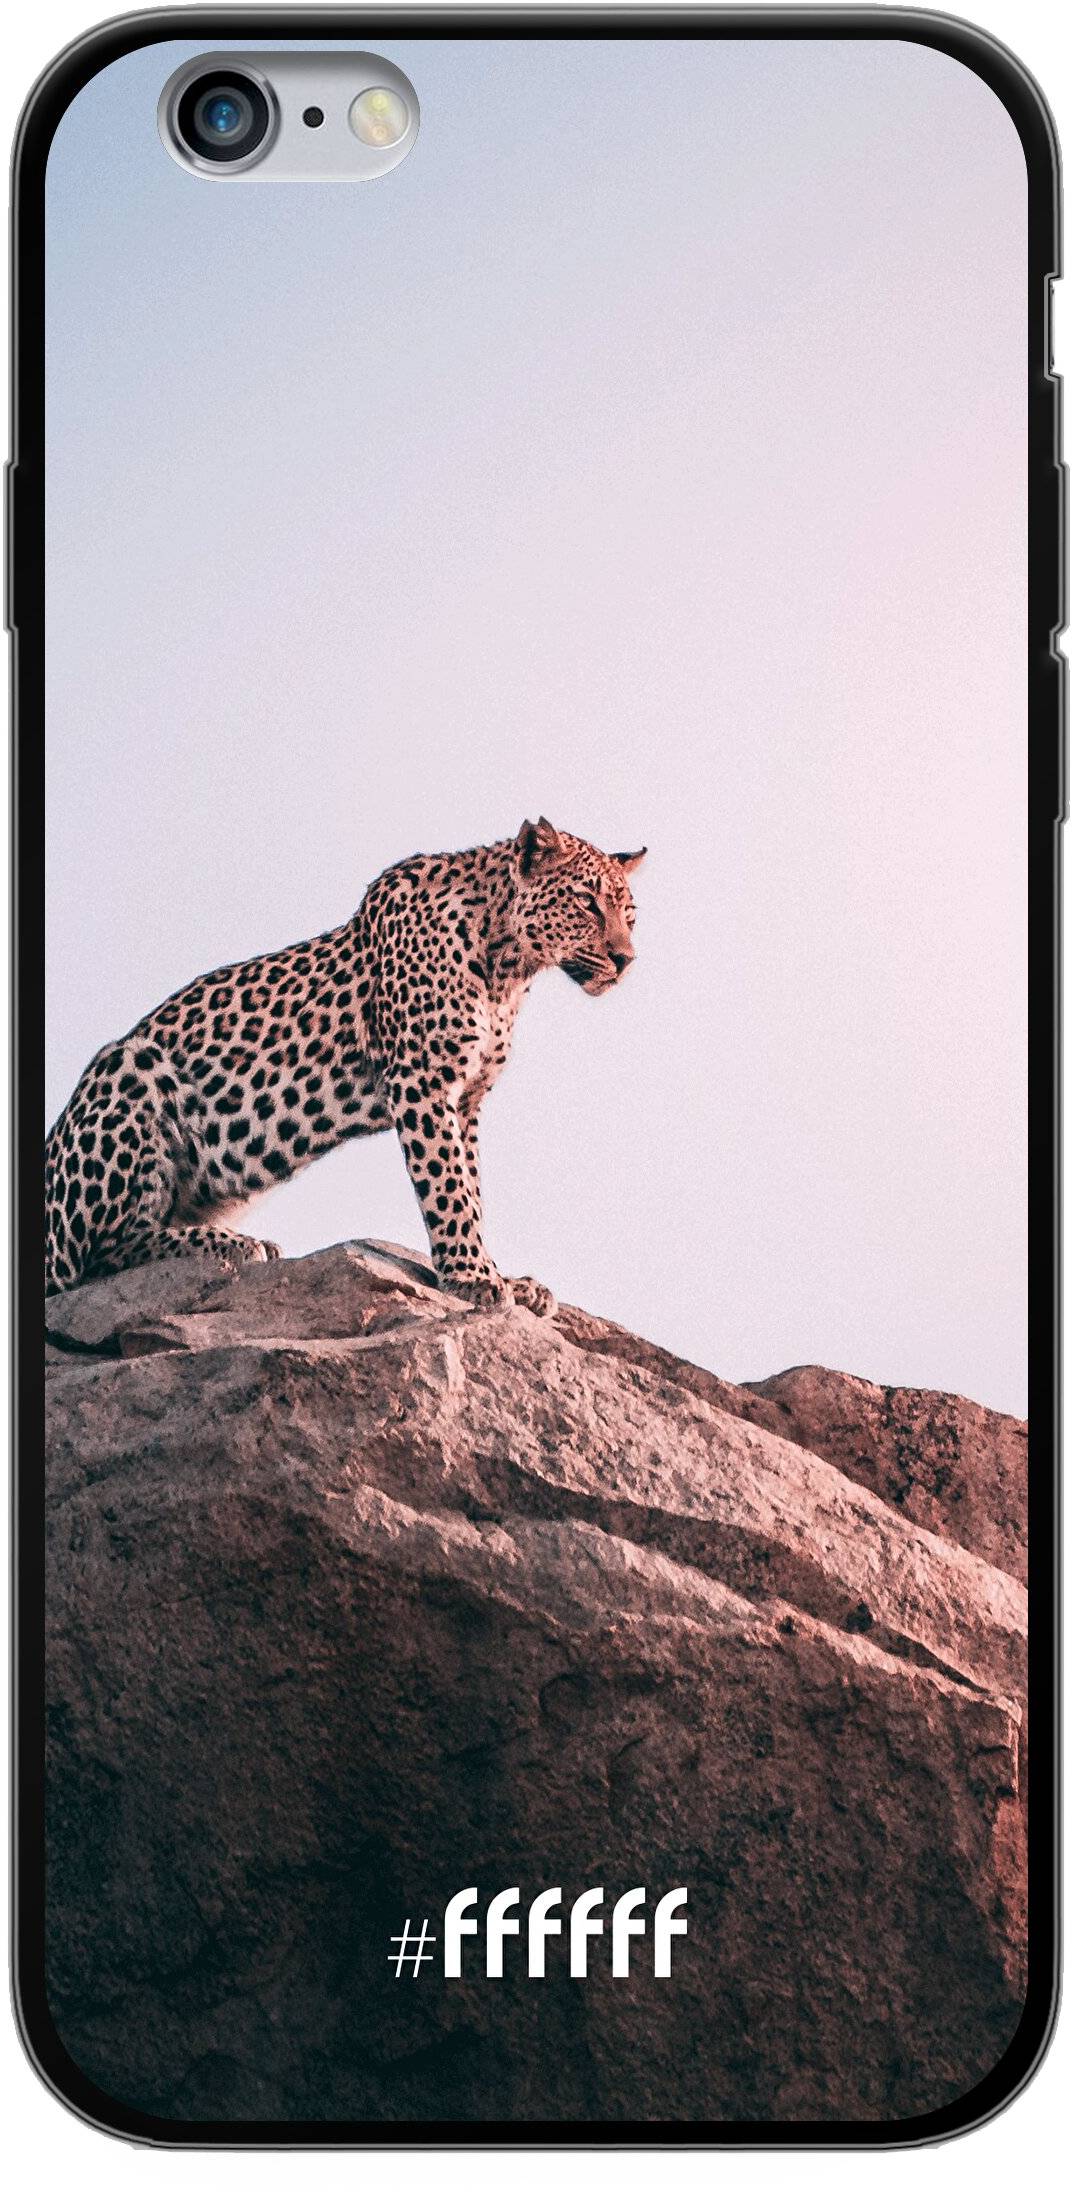 Leopard iPhone 6